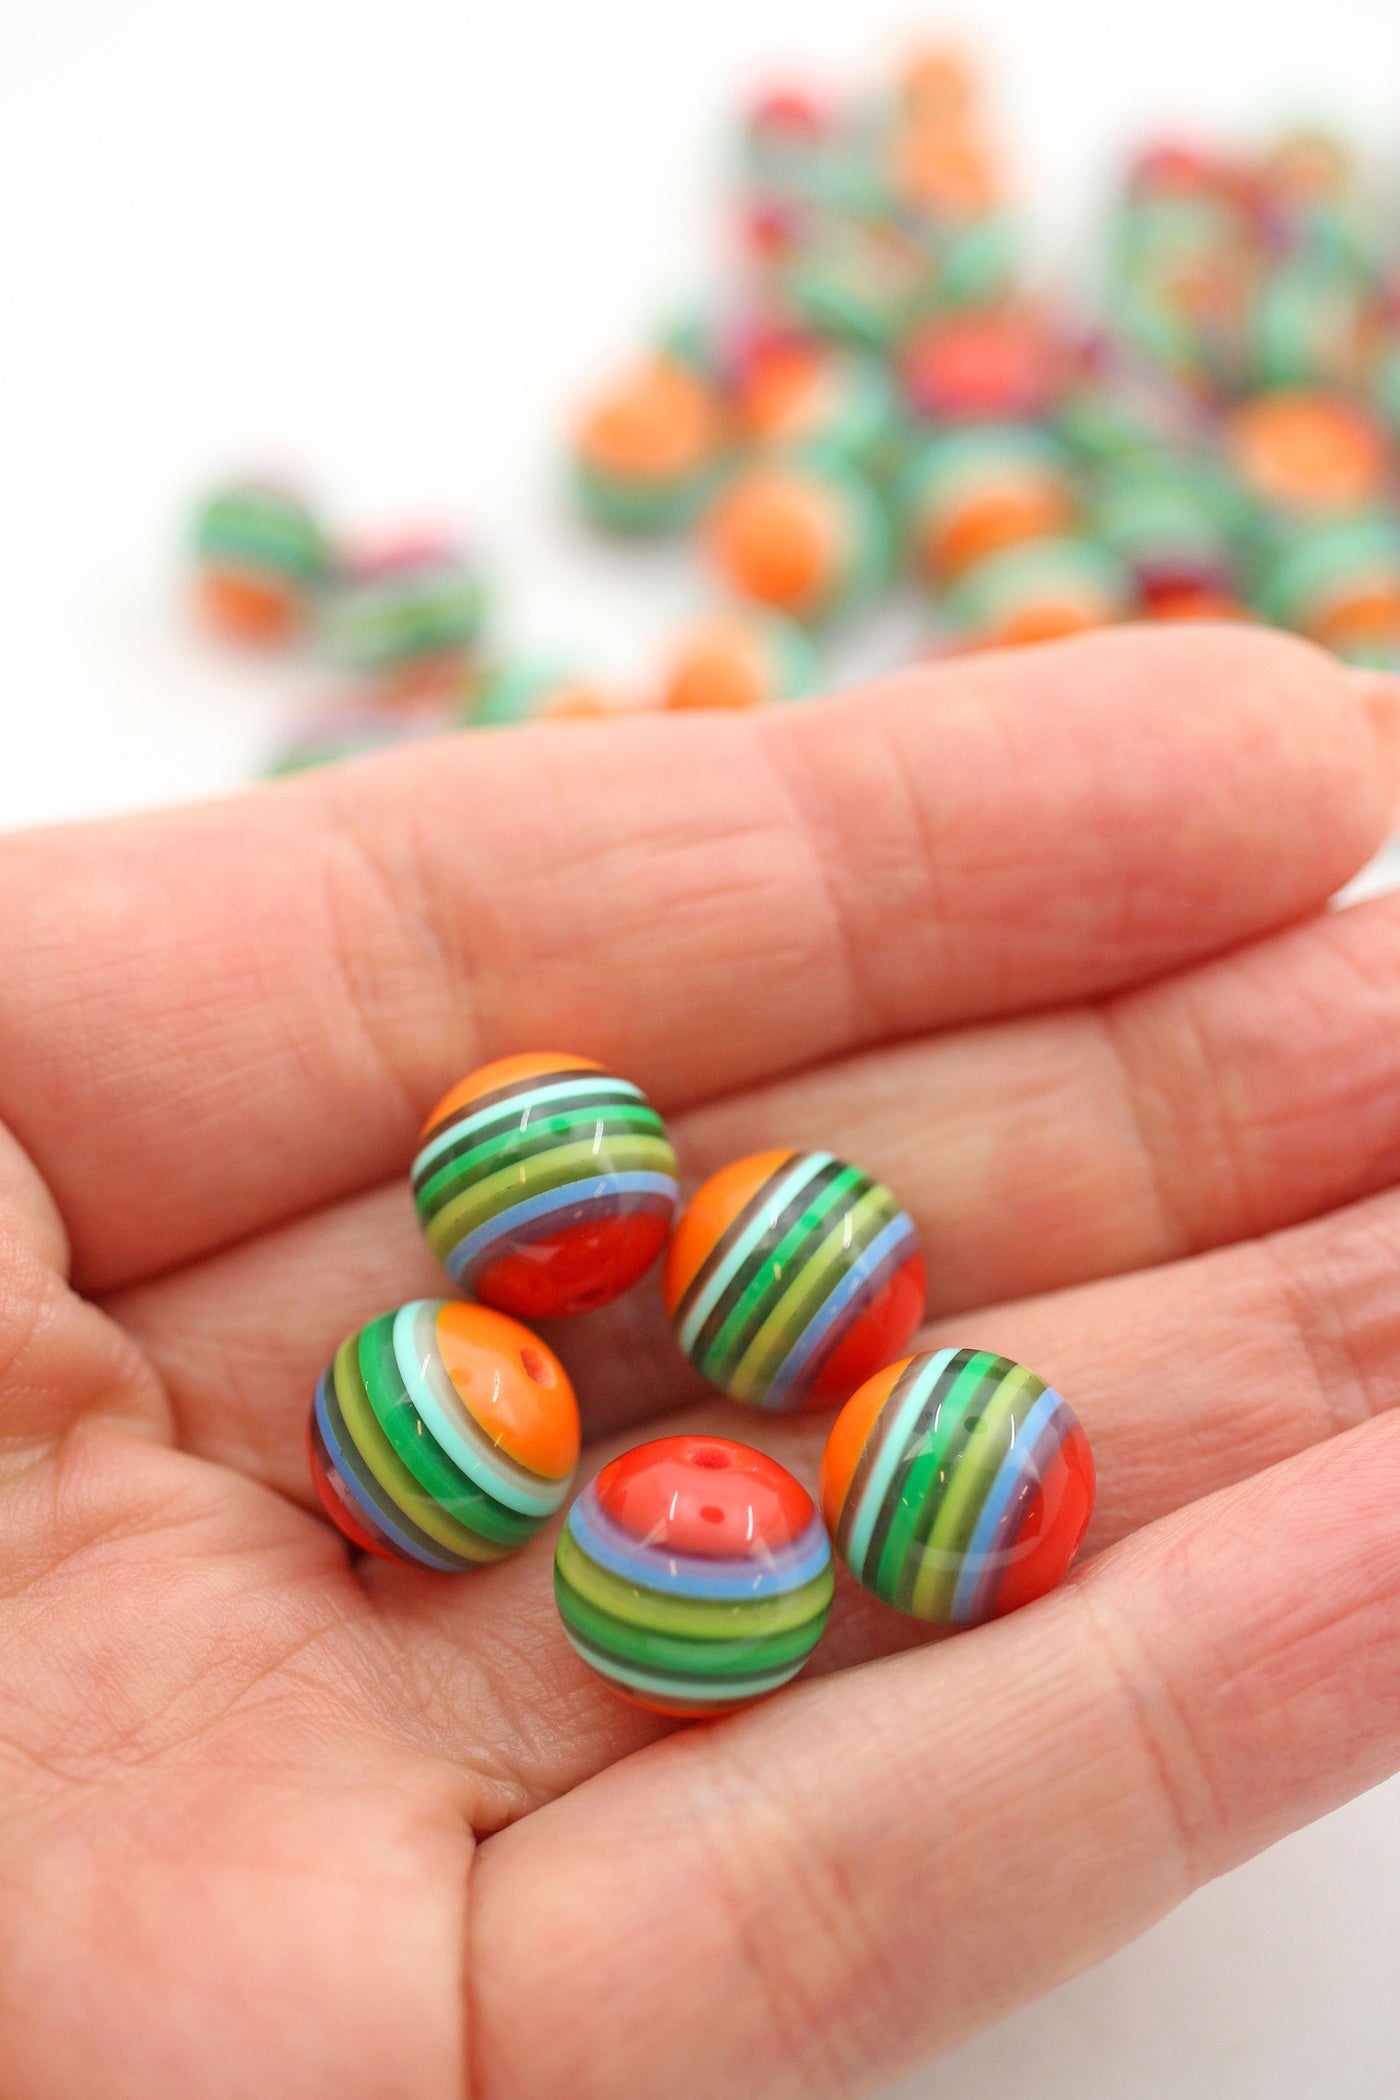 Rainbow Beads, Resin Beads, Colorful Striped Beads, Rainbow Beads